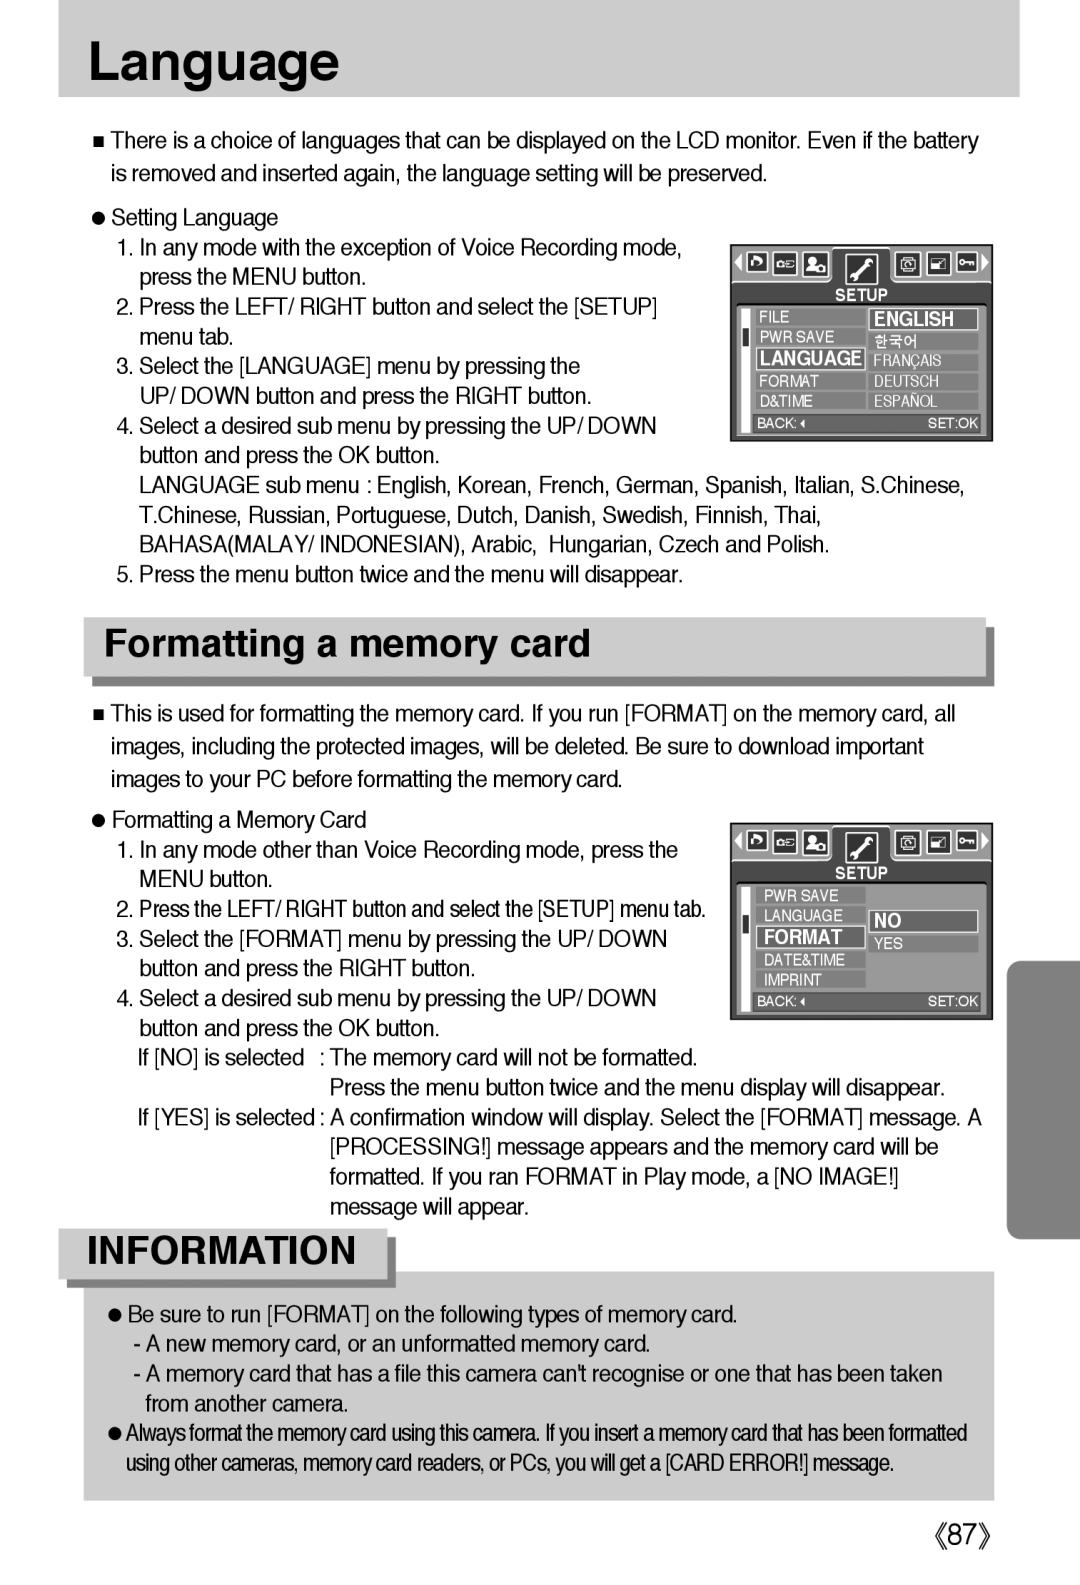 Samsung L50 Language, Formatting a memory card, 《87》, Select the LANGUAGE menu by pressing the, MENU button, Information 